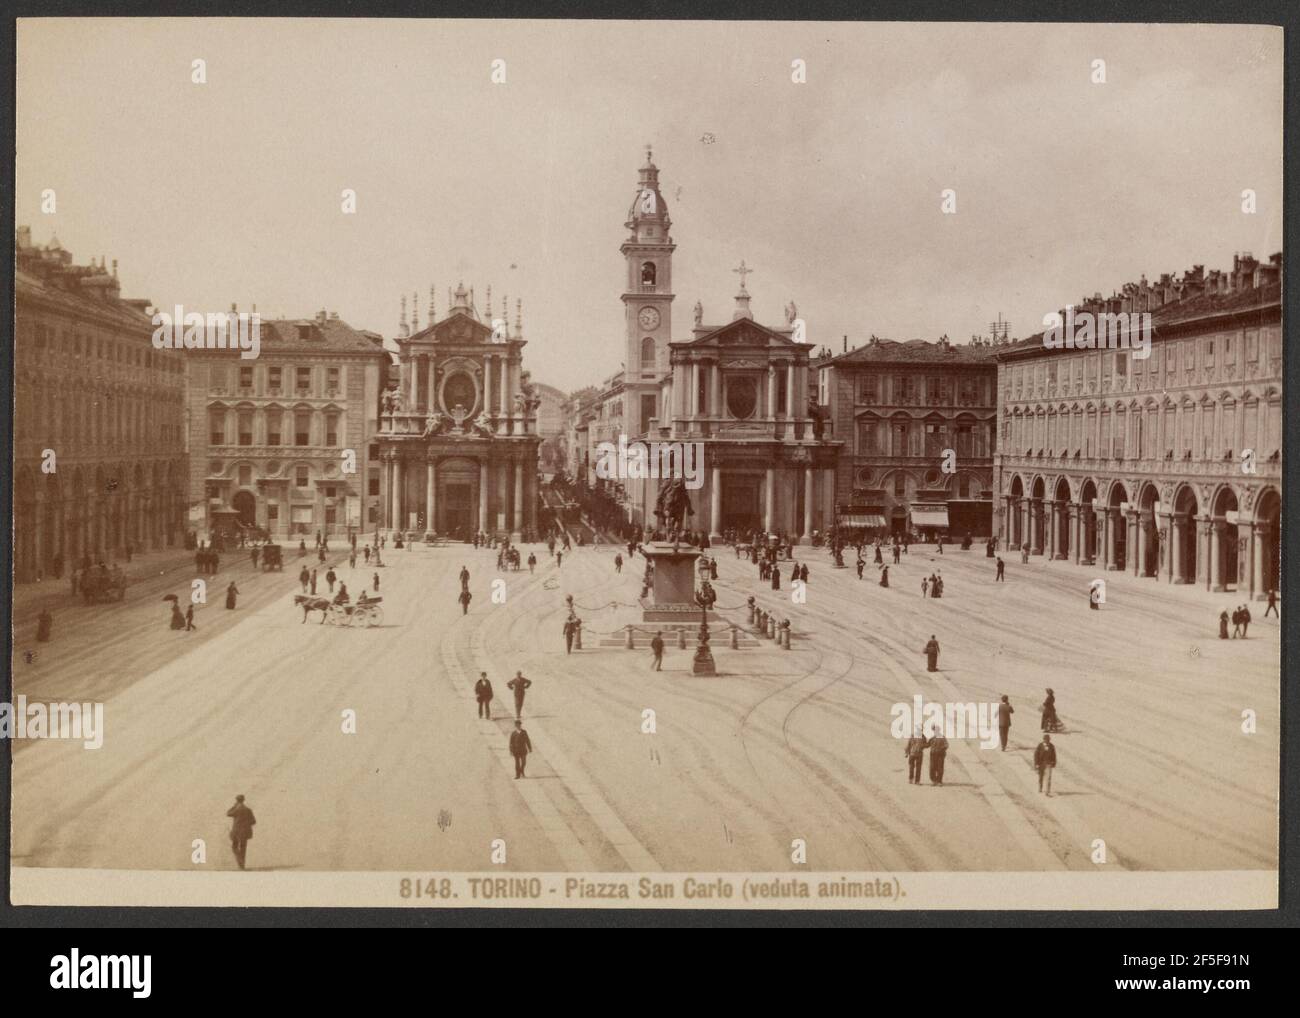 Torino - Piazza San Carlo (veduta animata). Desconocido Foto de stock